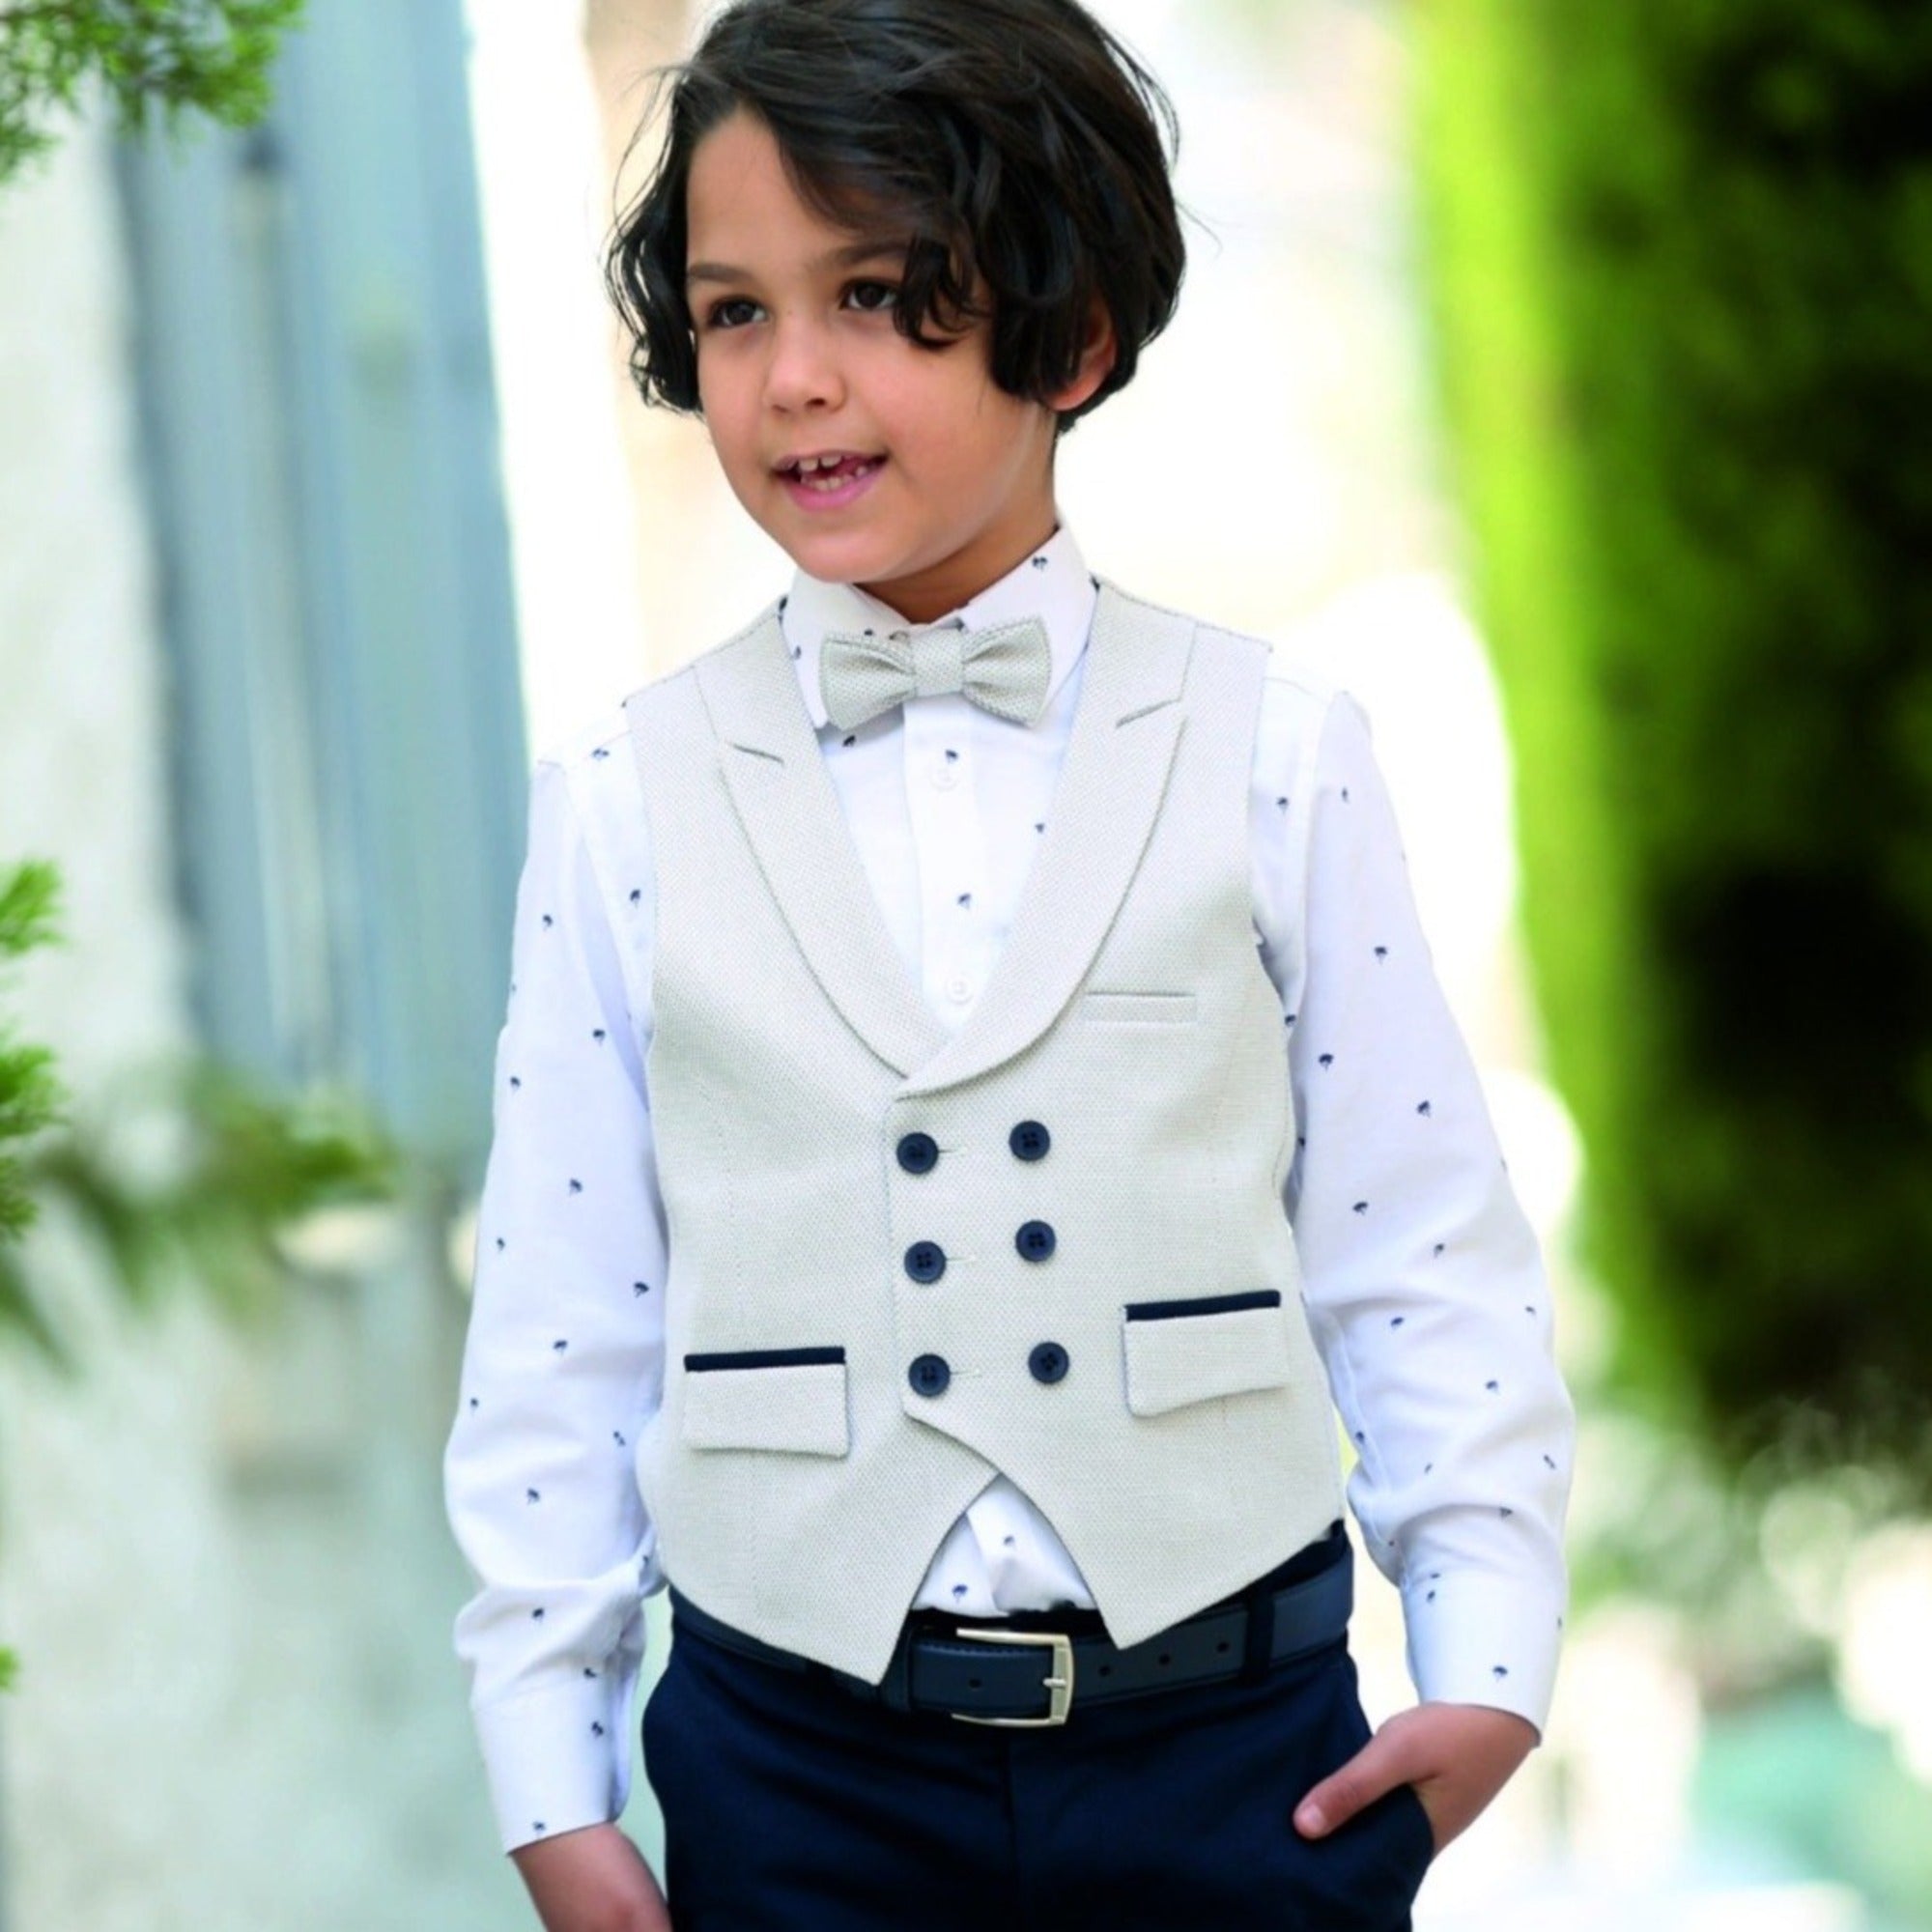 Little Prince Formal Boys Suit